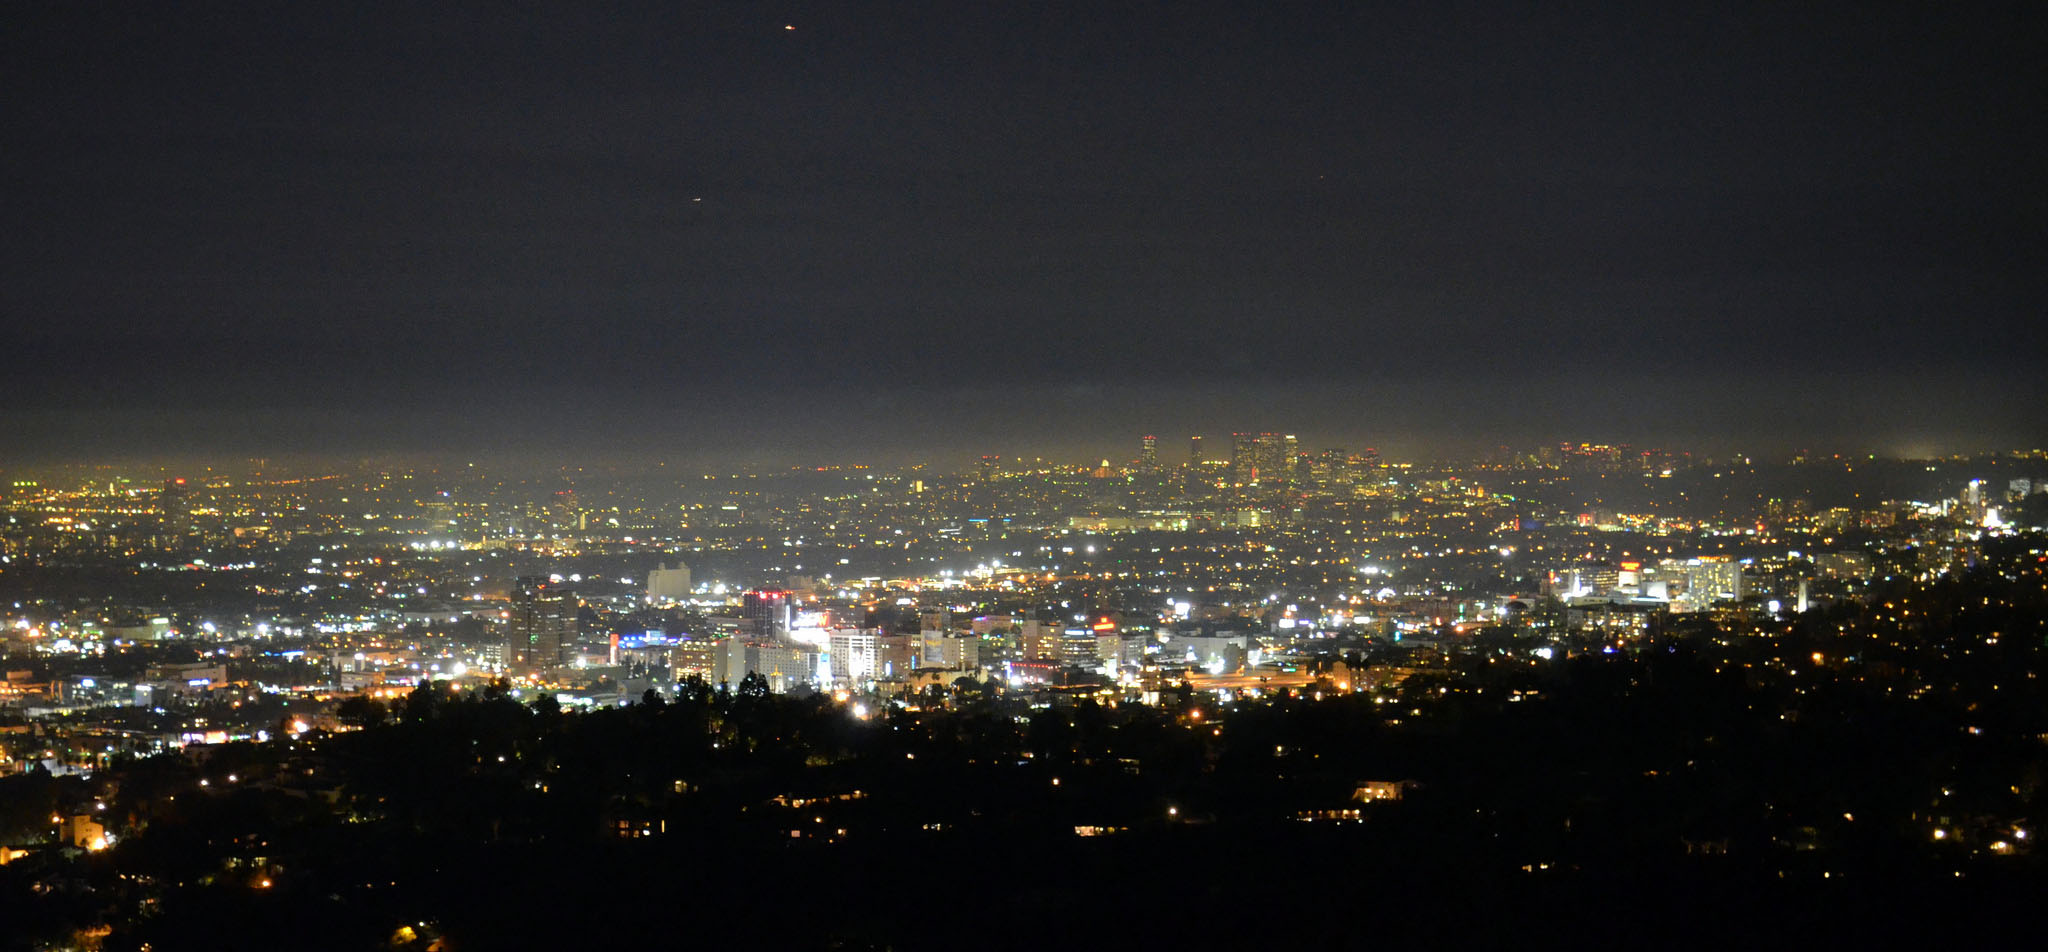 Los Angeles light pollution 